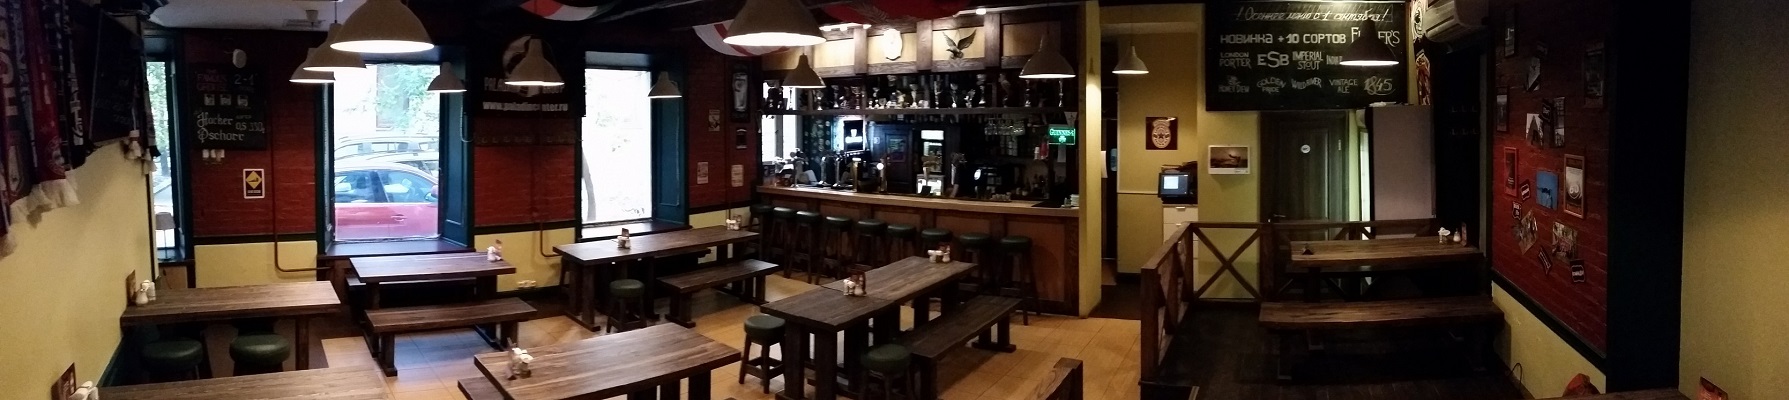 White Eagles pub (закрыт) панорама 1